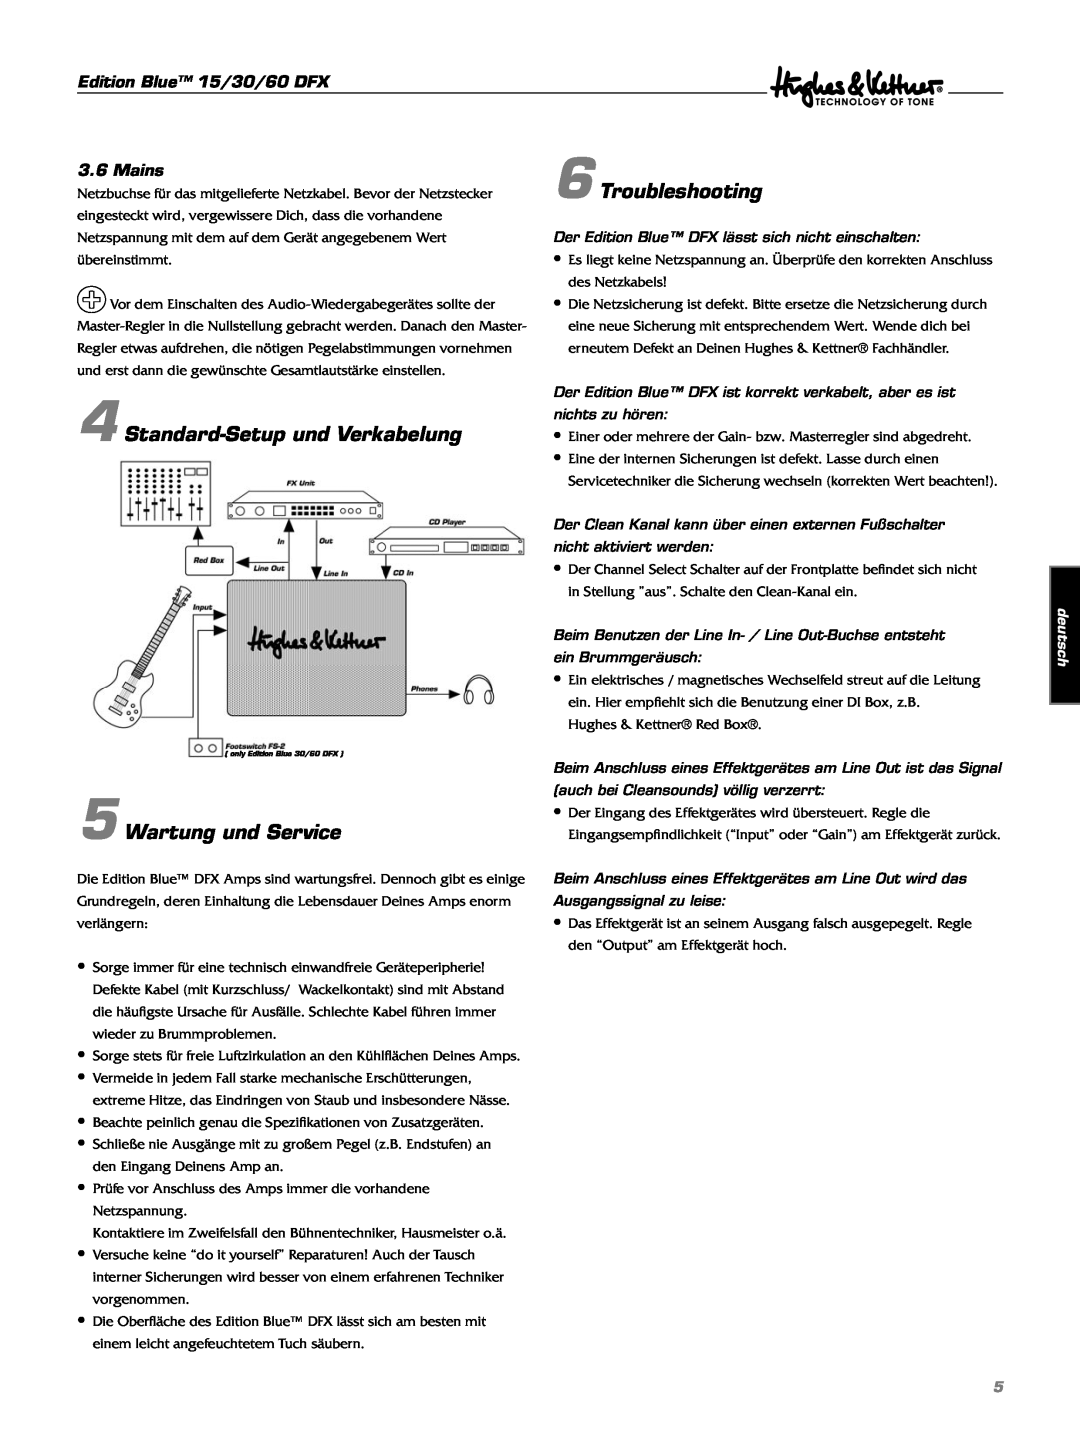 Hughes & Kettner 6Troubleshooting, Standard-Setupund Verkabelung, Wartung und Service, Edition Blue 15/30/60 DFX, Mains 